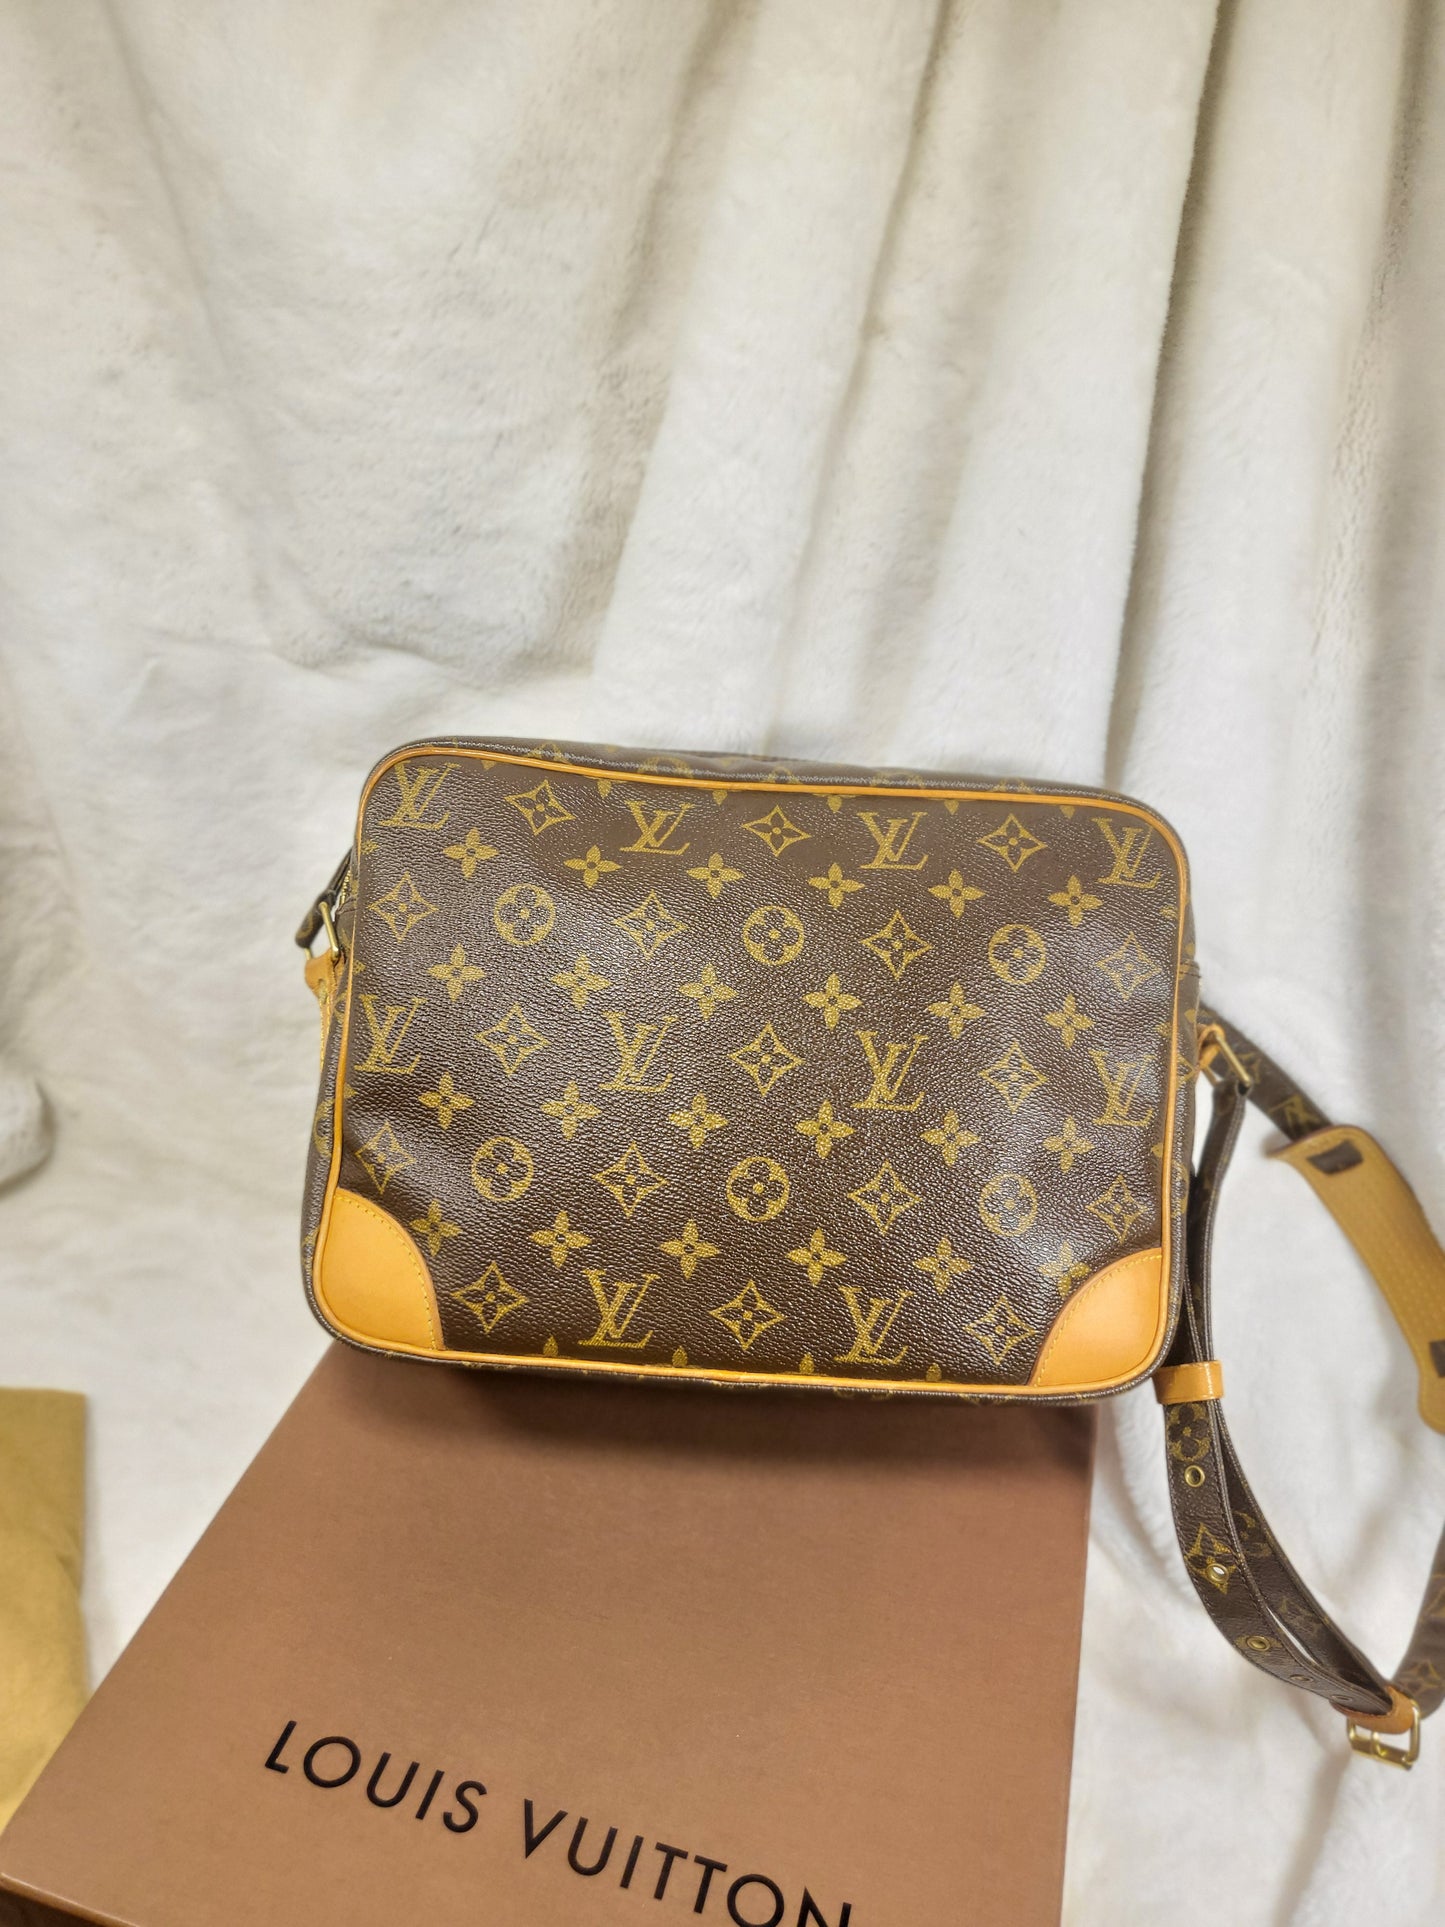 Authentic pre-owned Louis Vuitton Nile pm crossbody shoulder bag